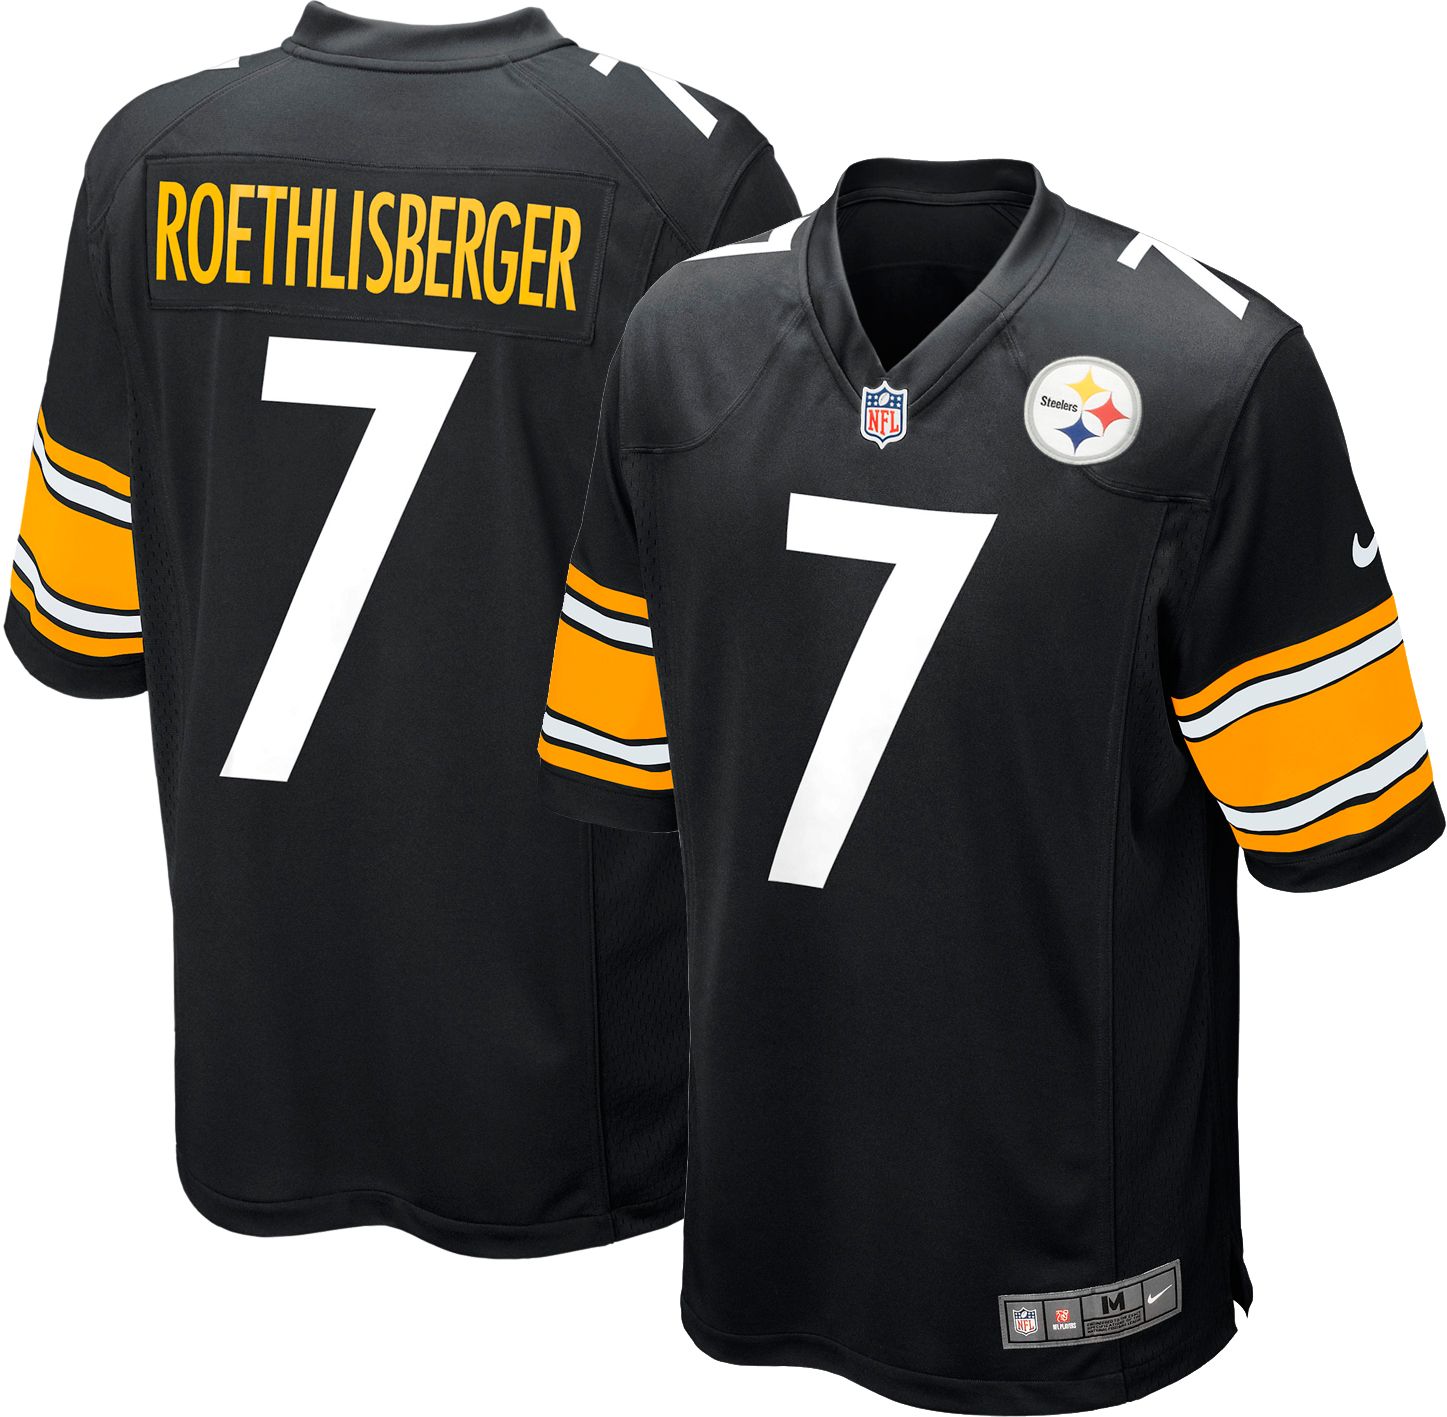 Pittsburgh Steelers Ben Roethlisberger 